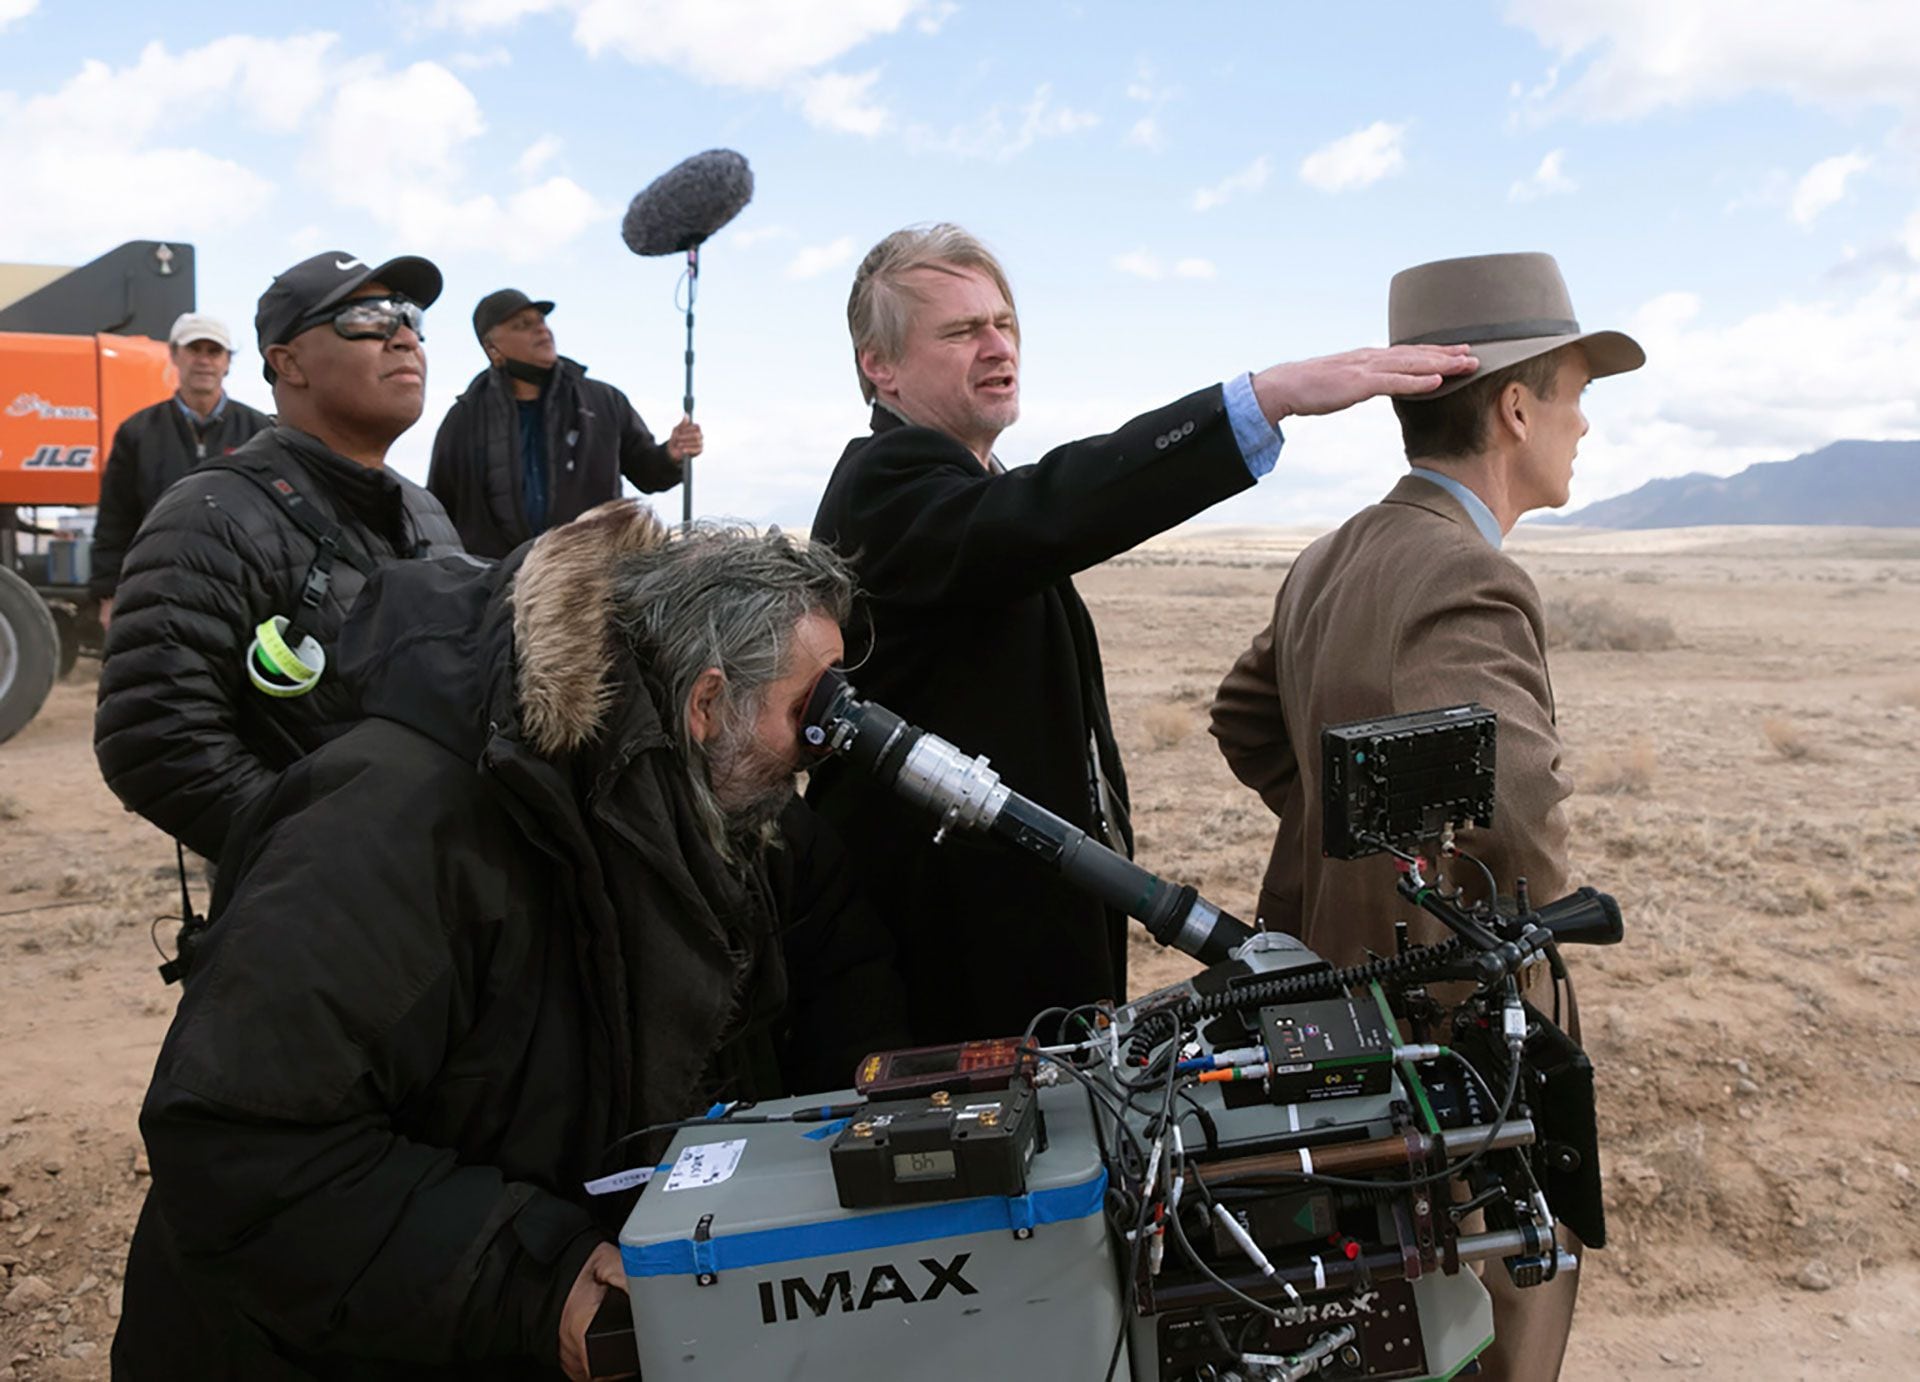 Antes de “Oppenheimer”, Christopher Nolan explica las mejores formas para ver una película - Infobae